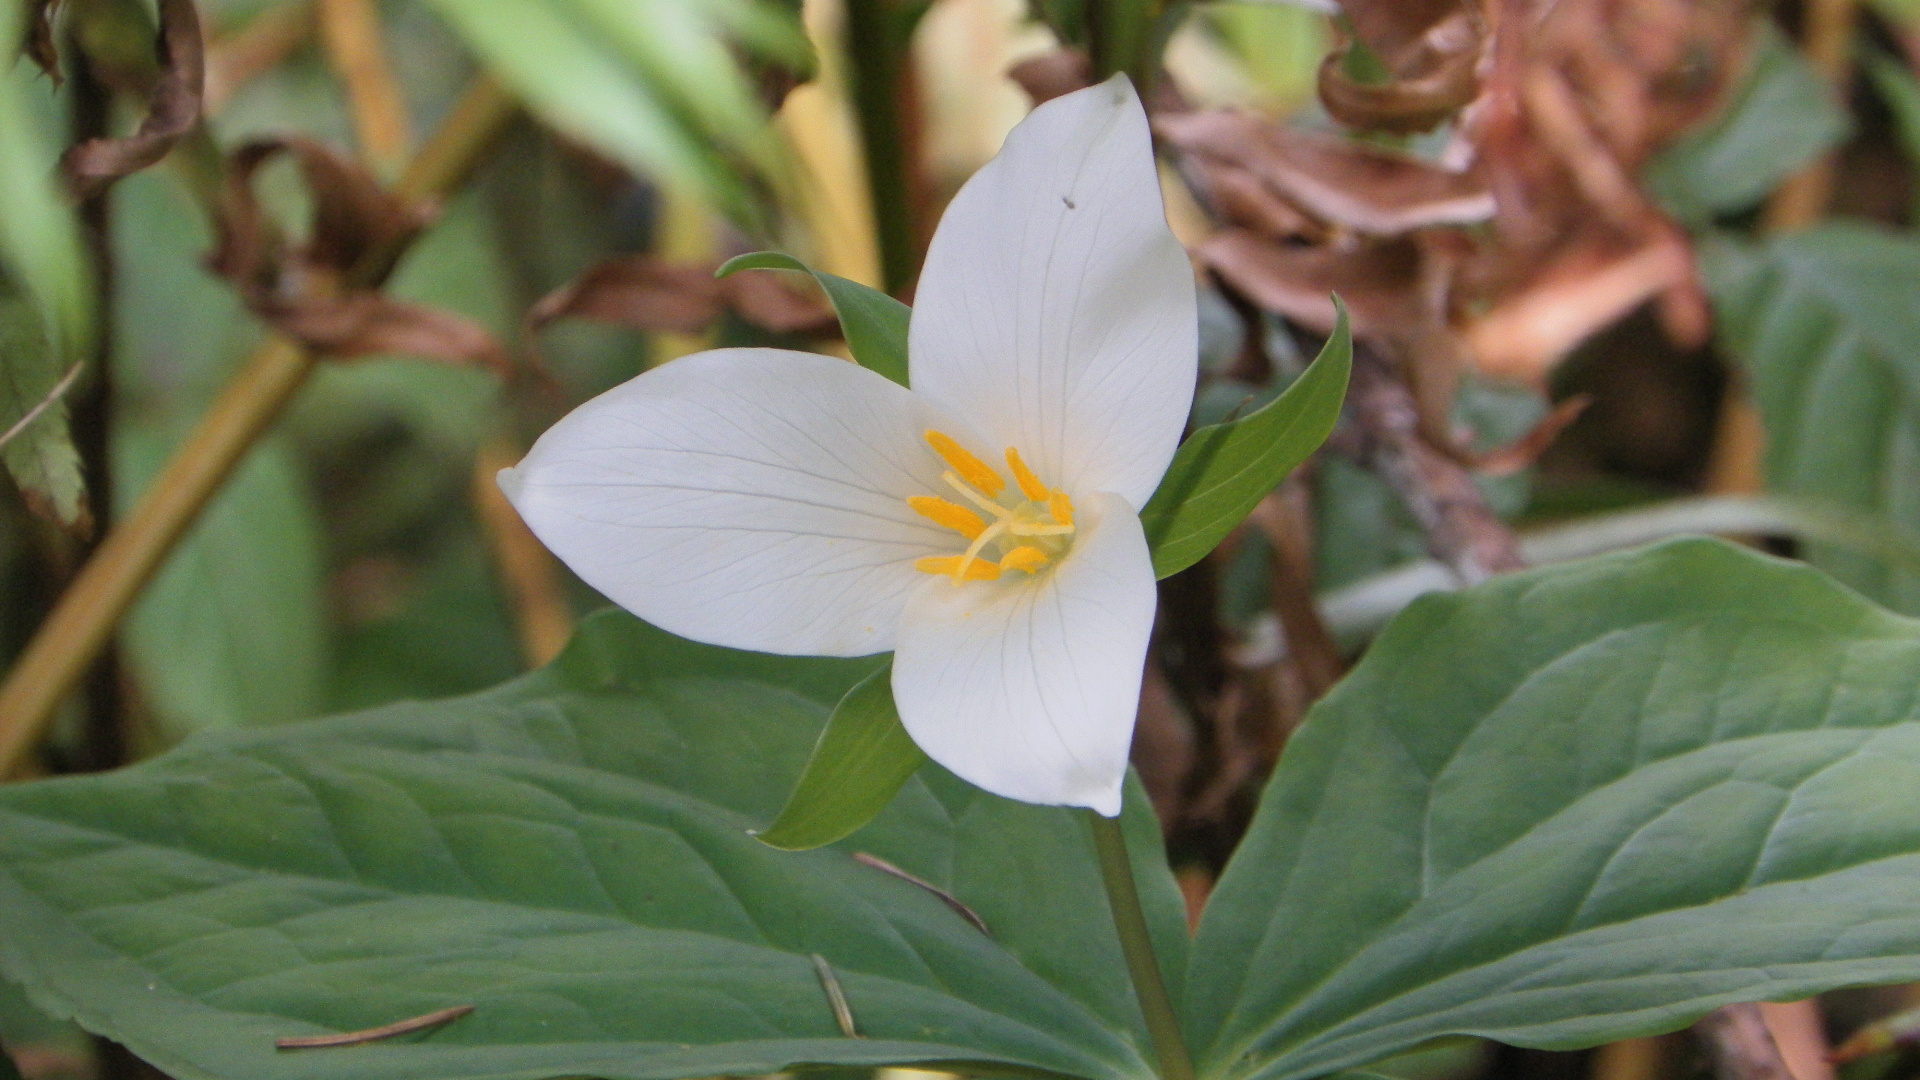 Trillium Wildflower